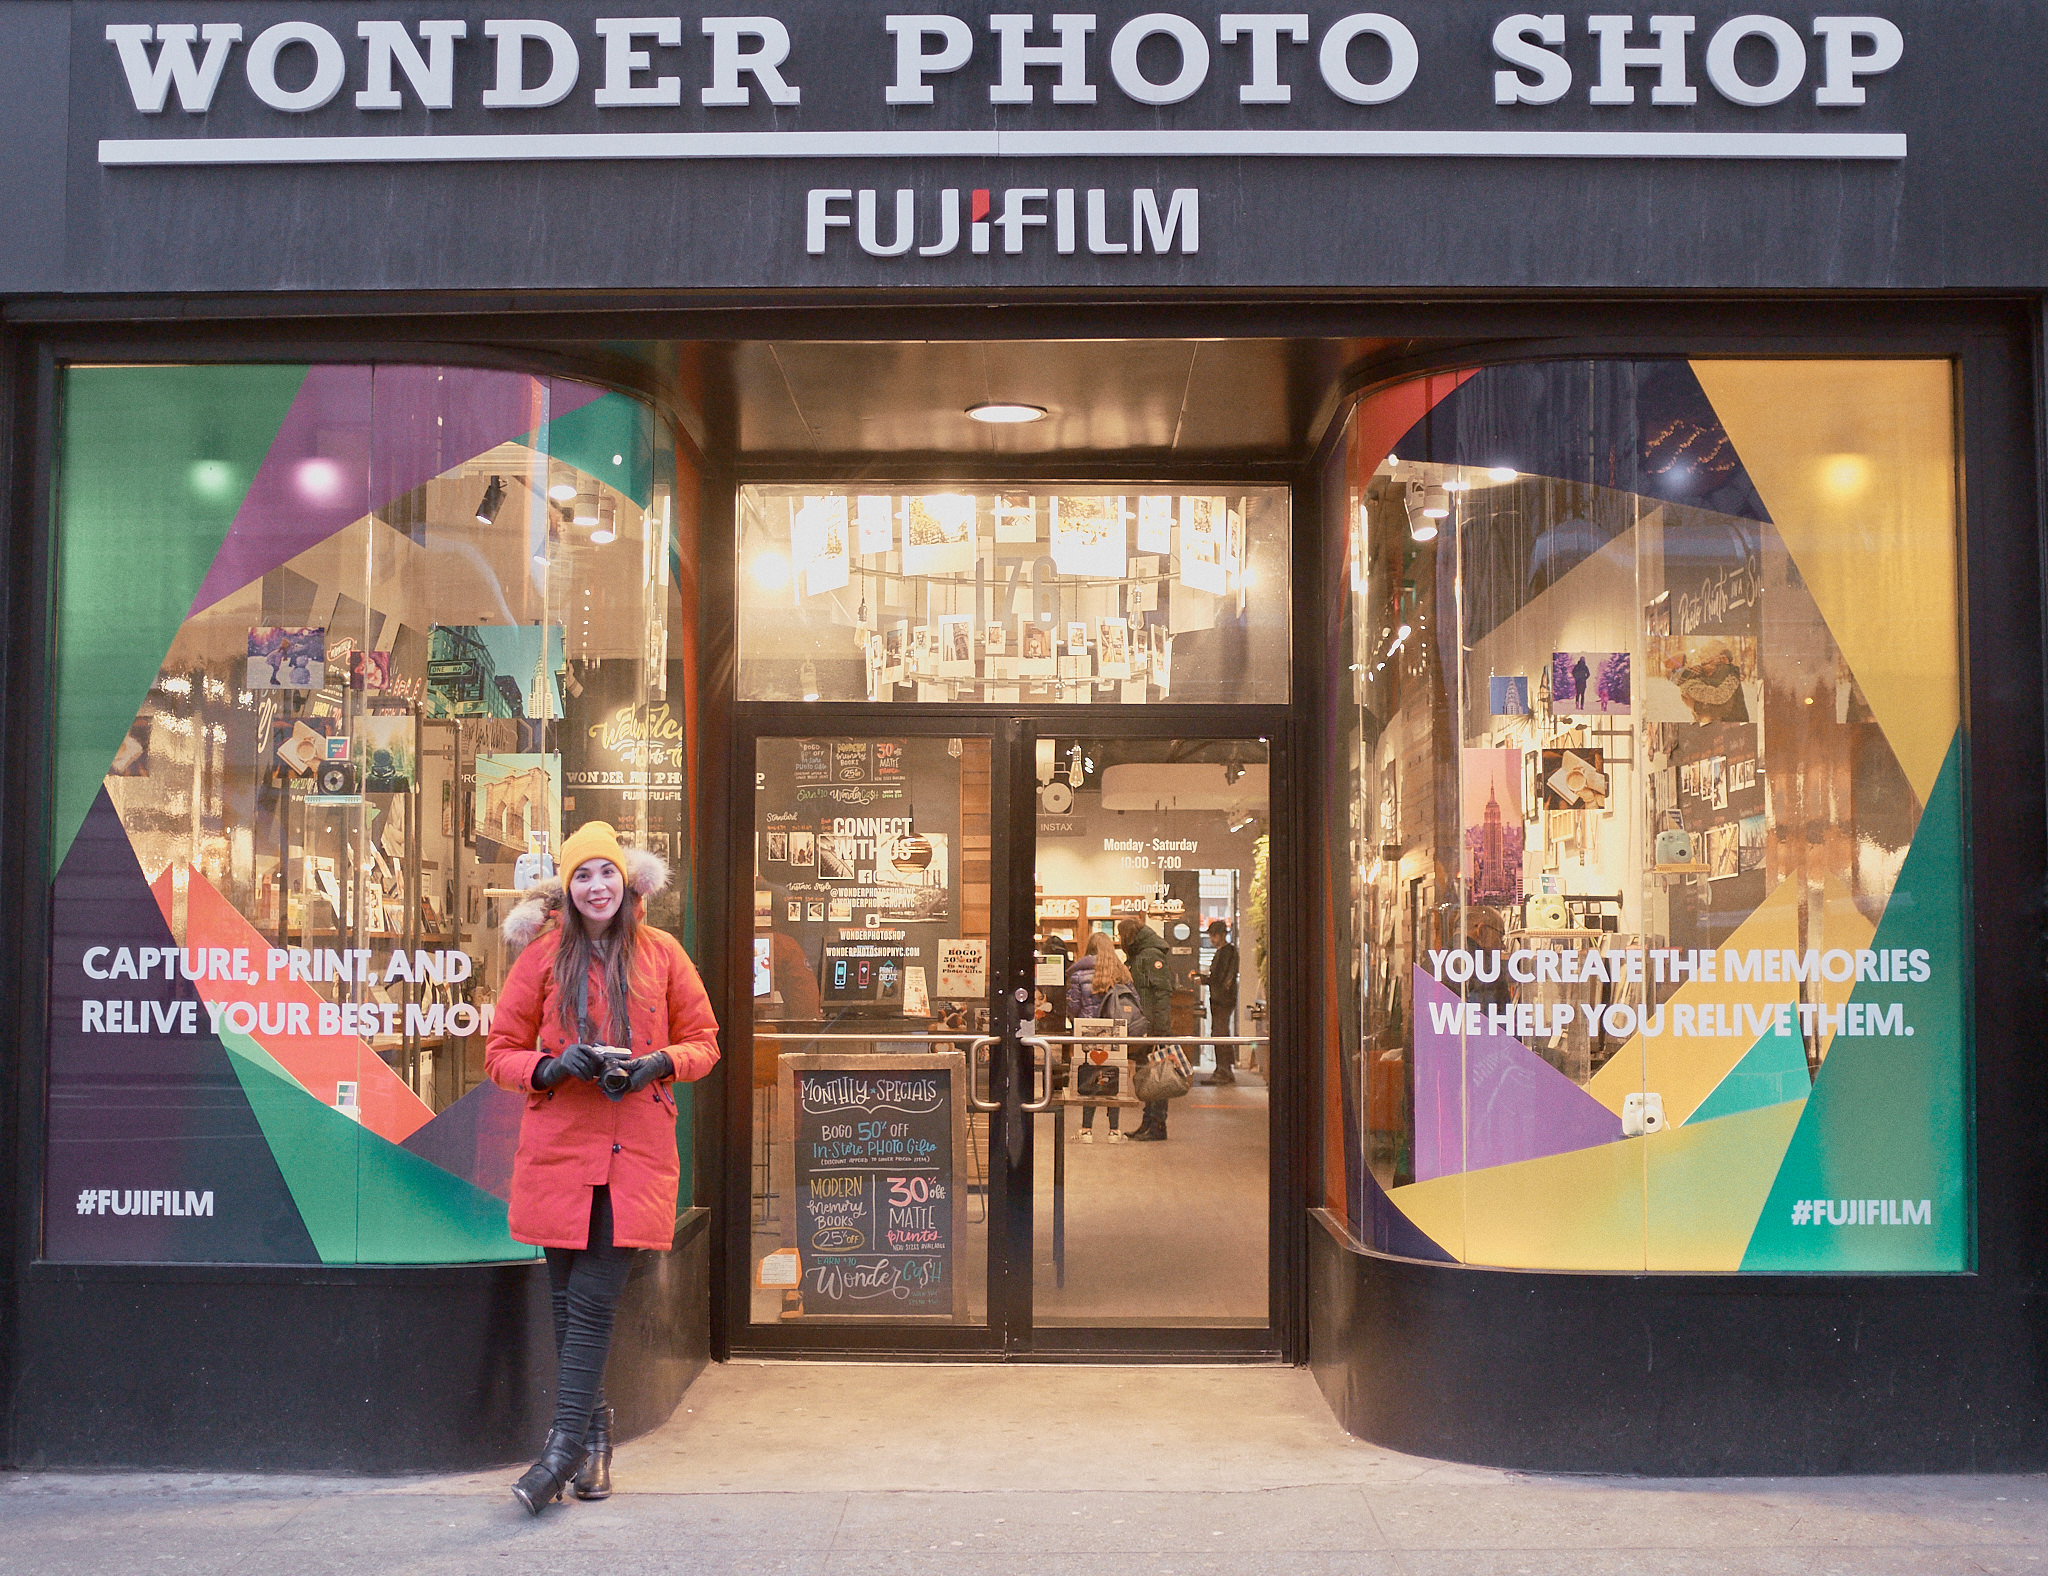 Verzoenen generatie troosten Test-driving Cameras from the Fujifilm Wonder Shop – She's So Bright